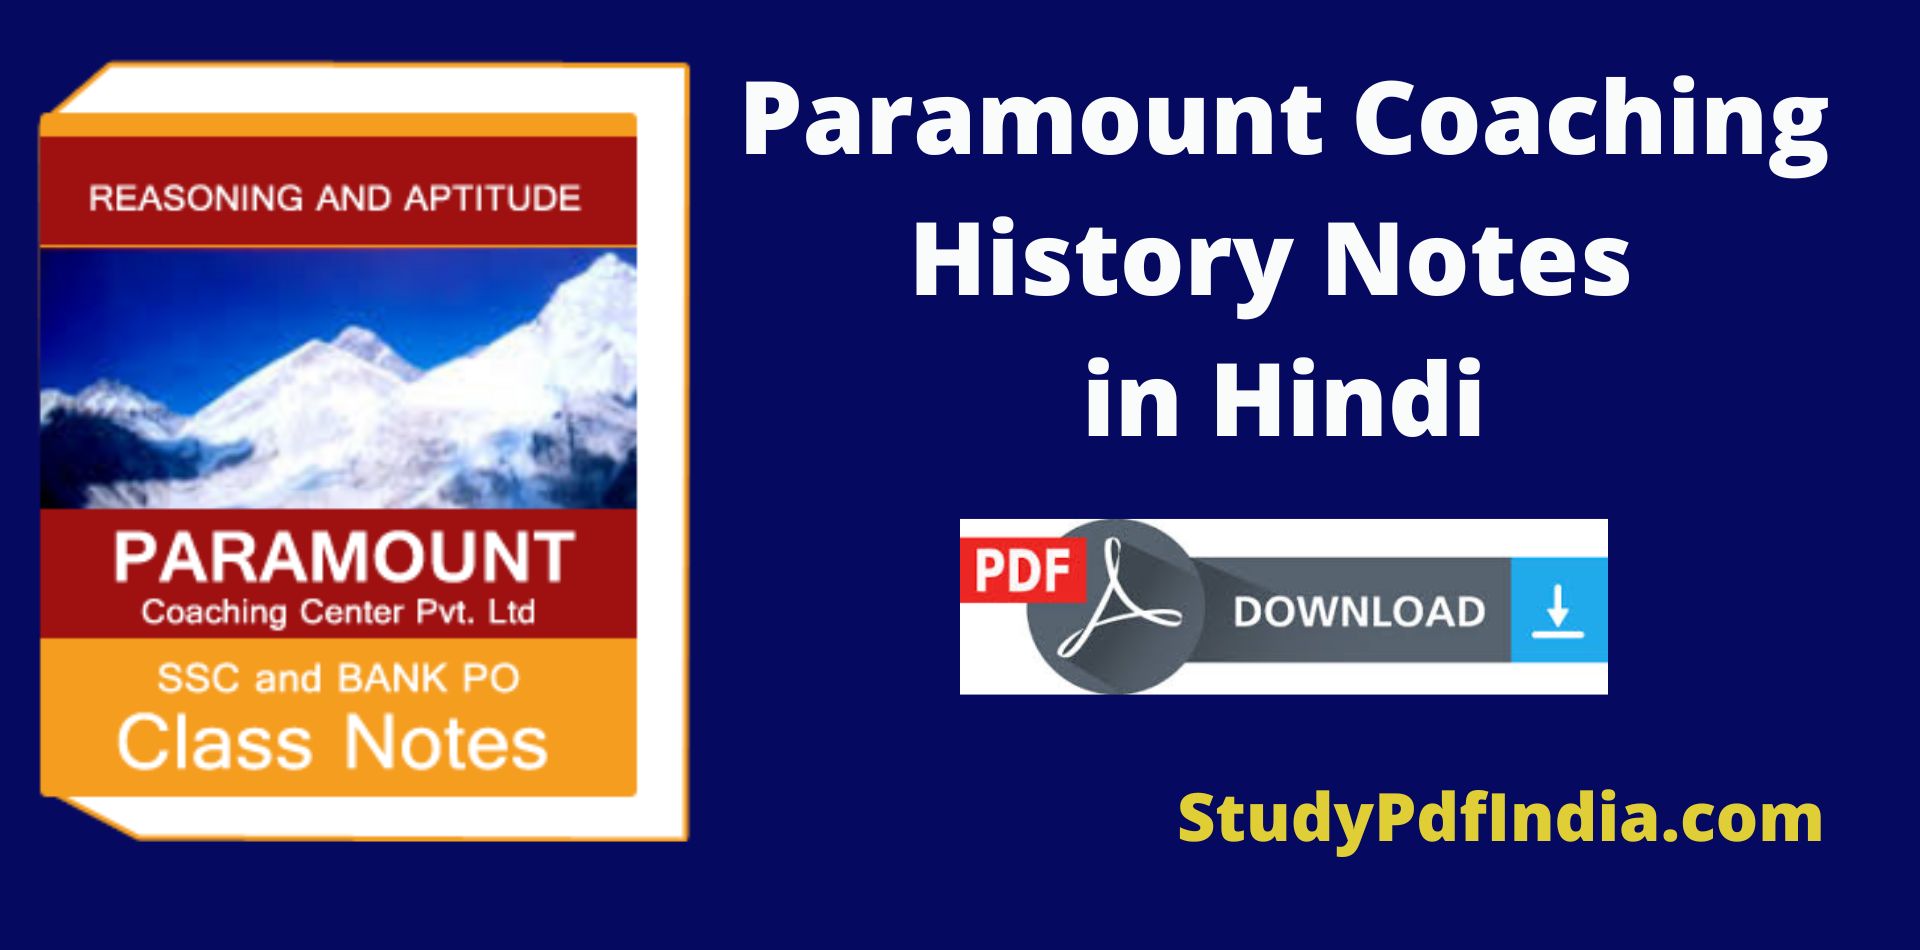 {Paramount Coaching**} History Notes PDF Download in Hindi